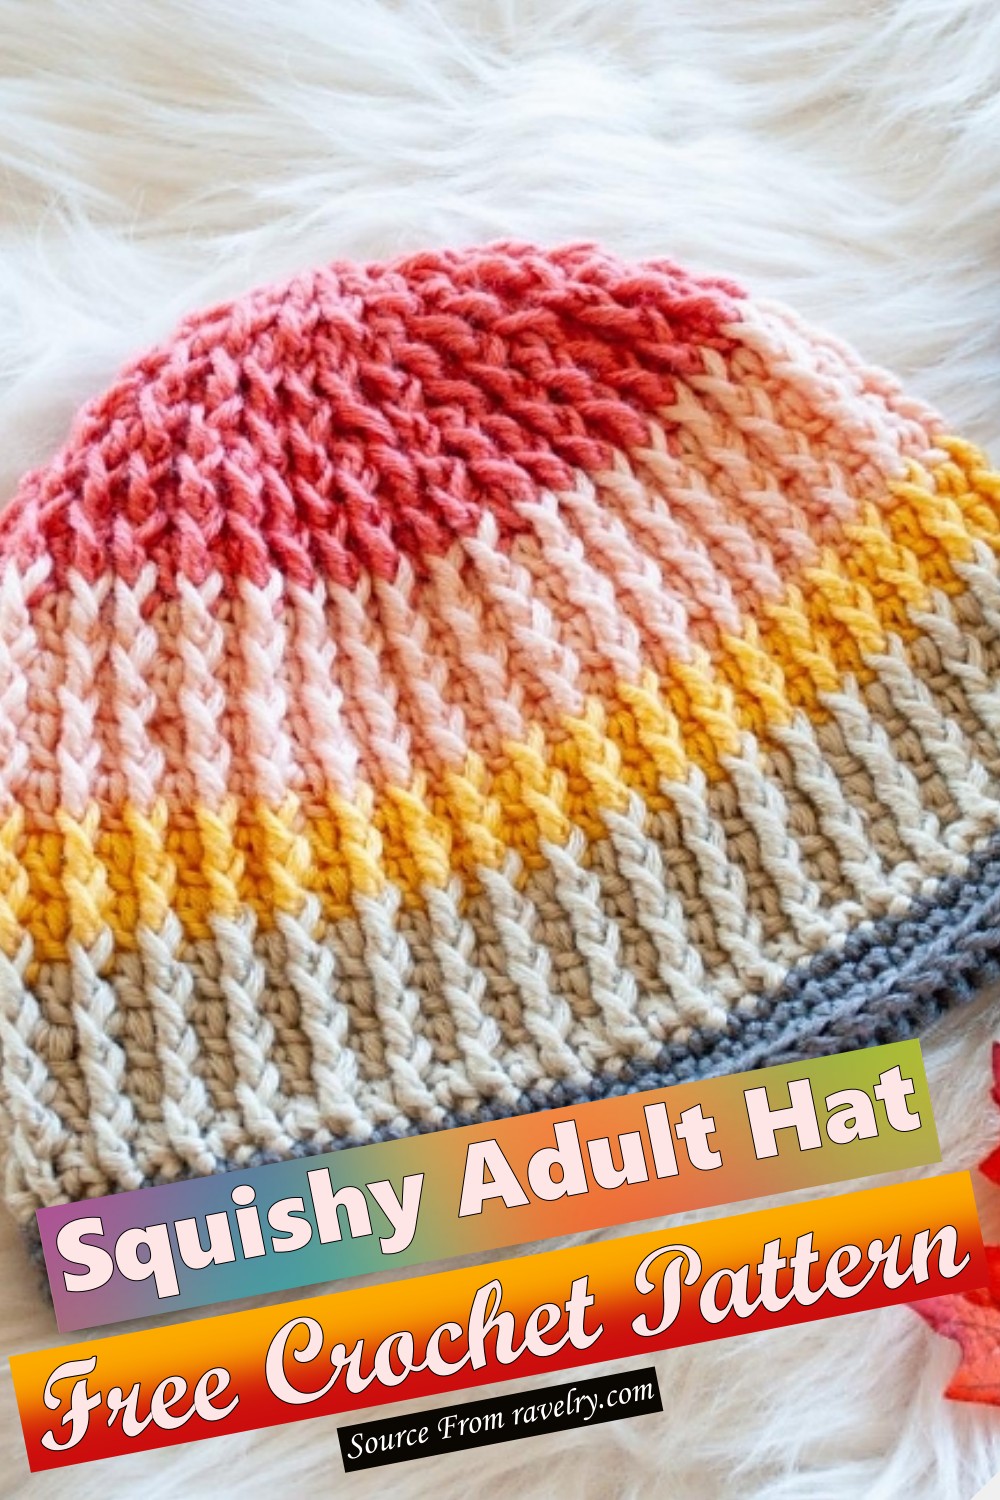 Free Crochet Squishy Adult Hat Pattern